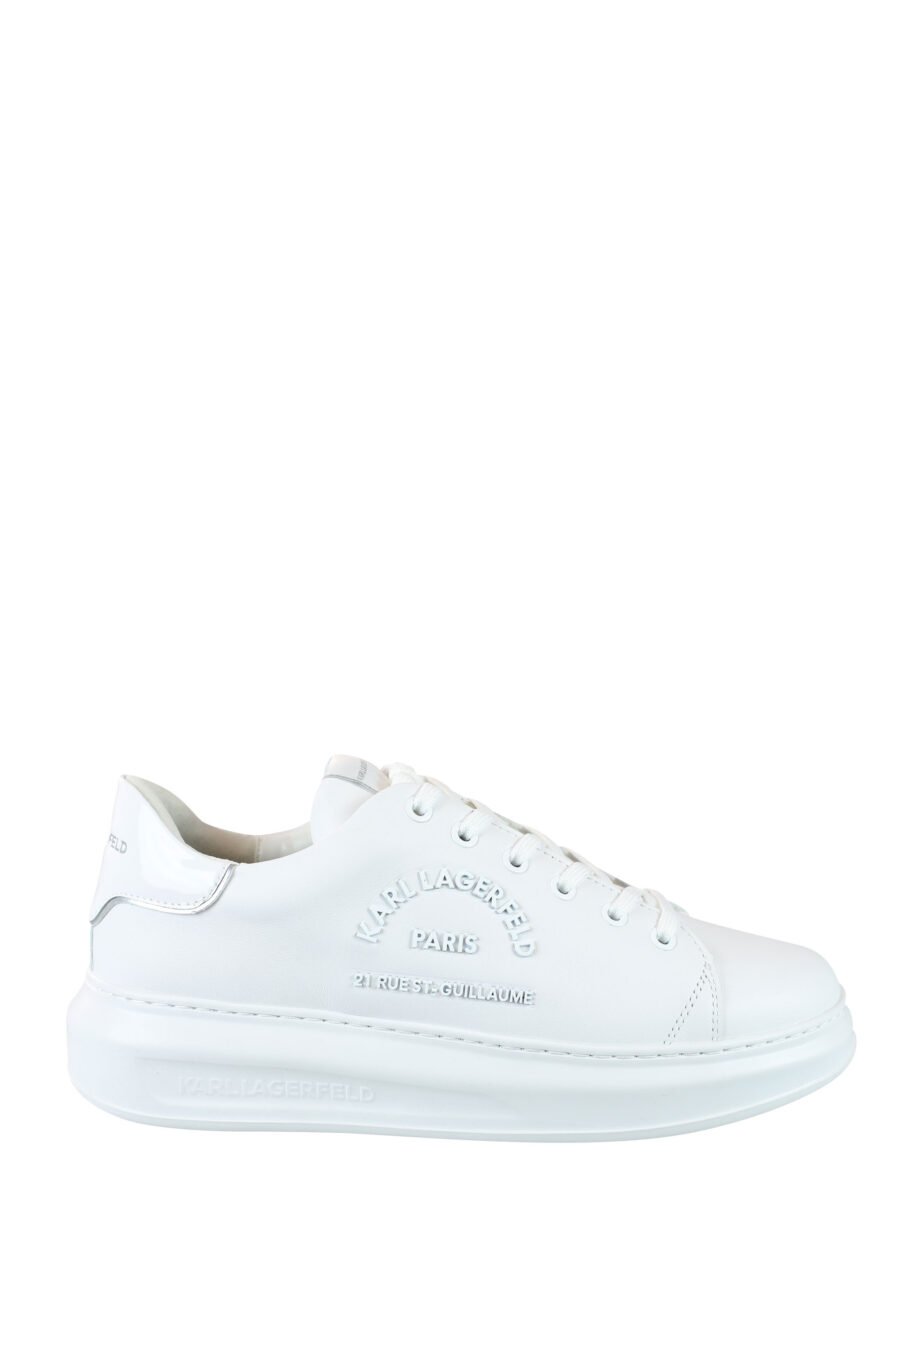 Zapatillas blancas con logo "rue st guillaume" blanco - IMG 0025